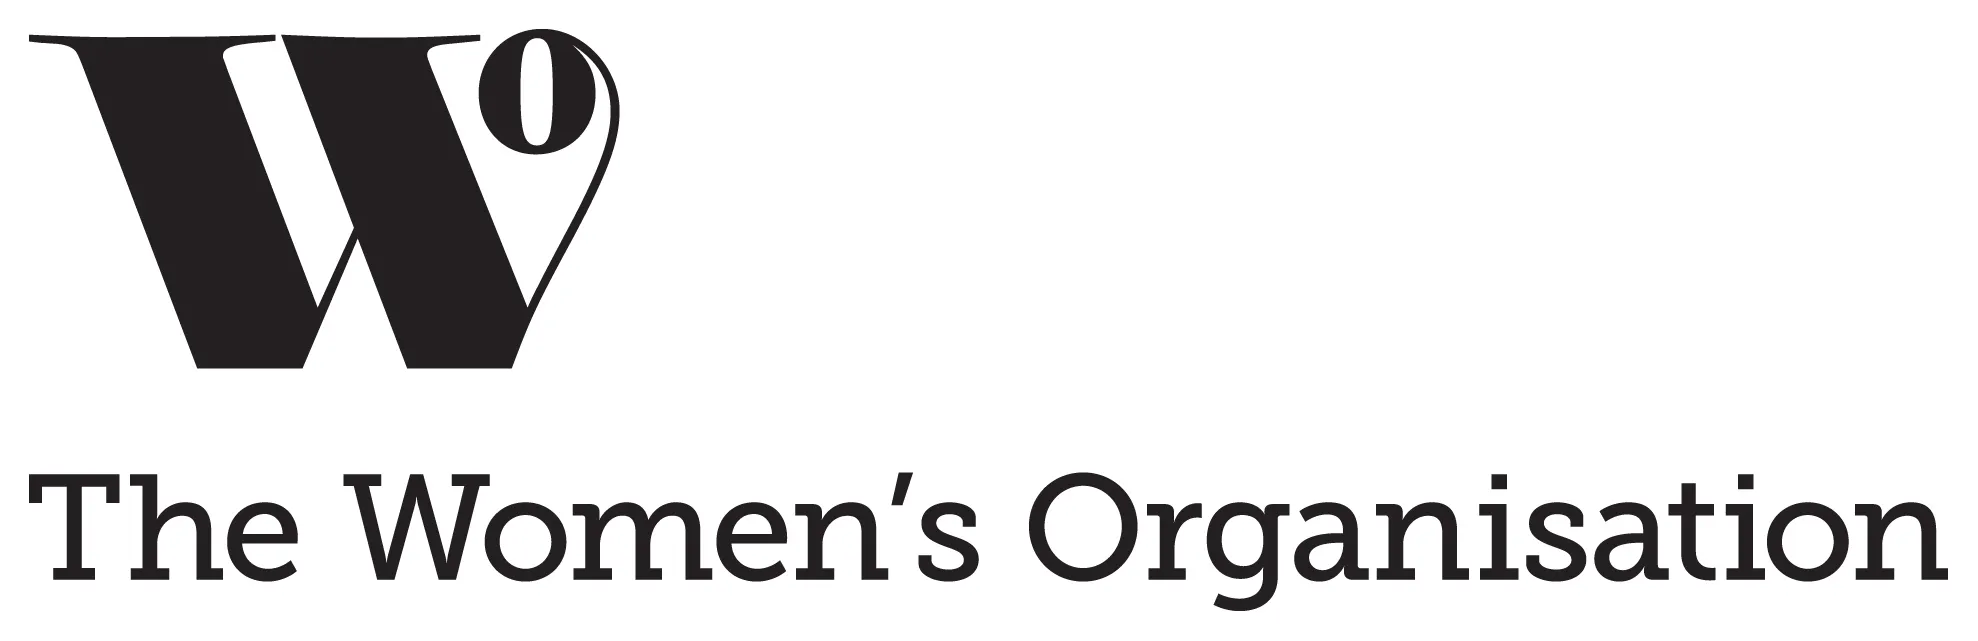 The Women's Organisation logo